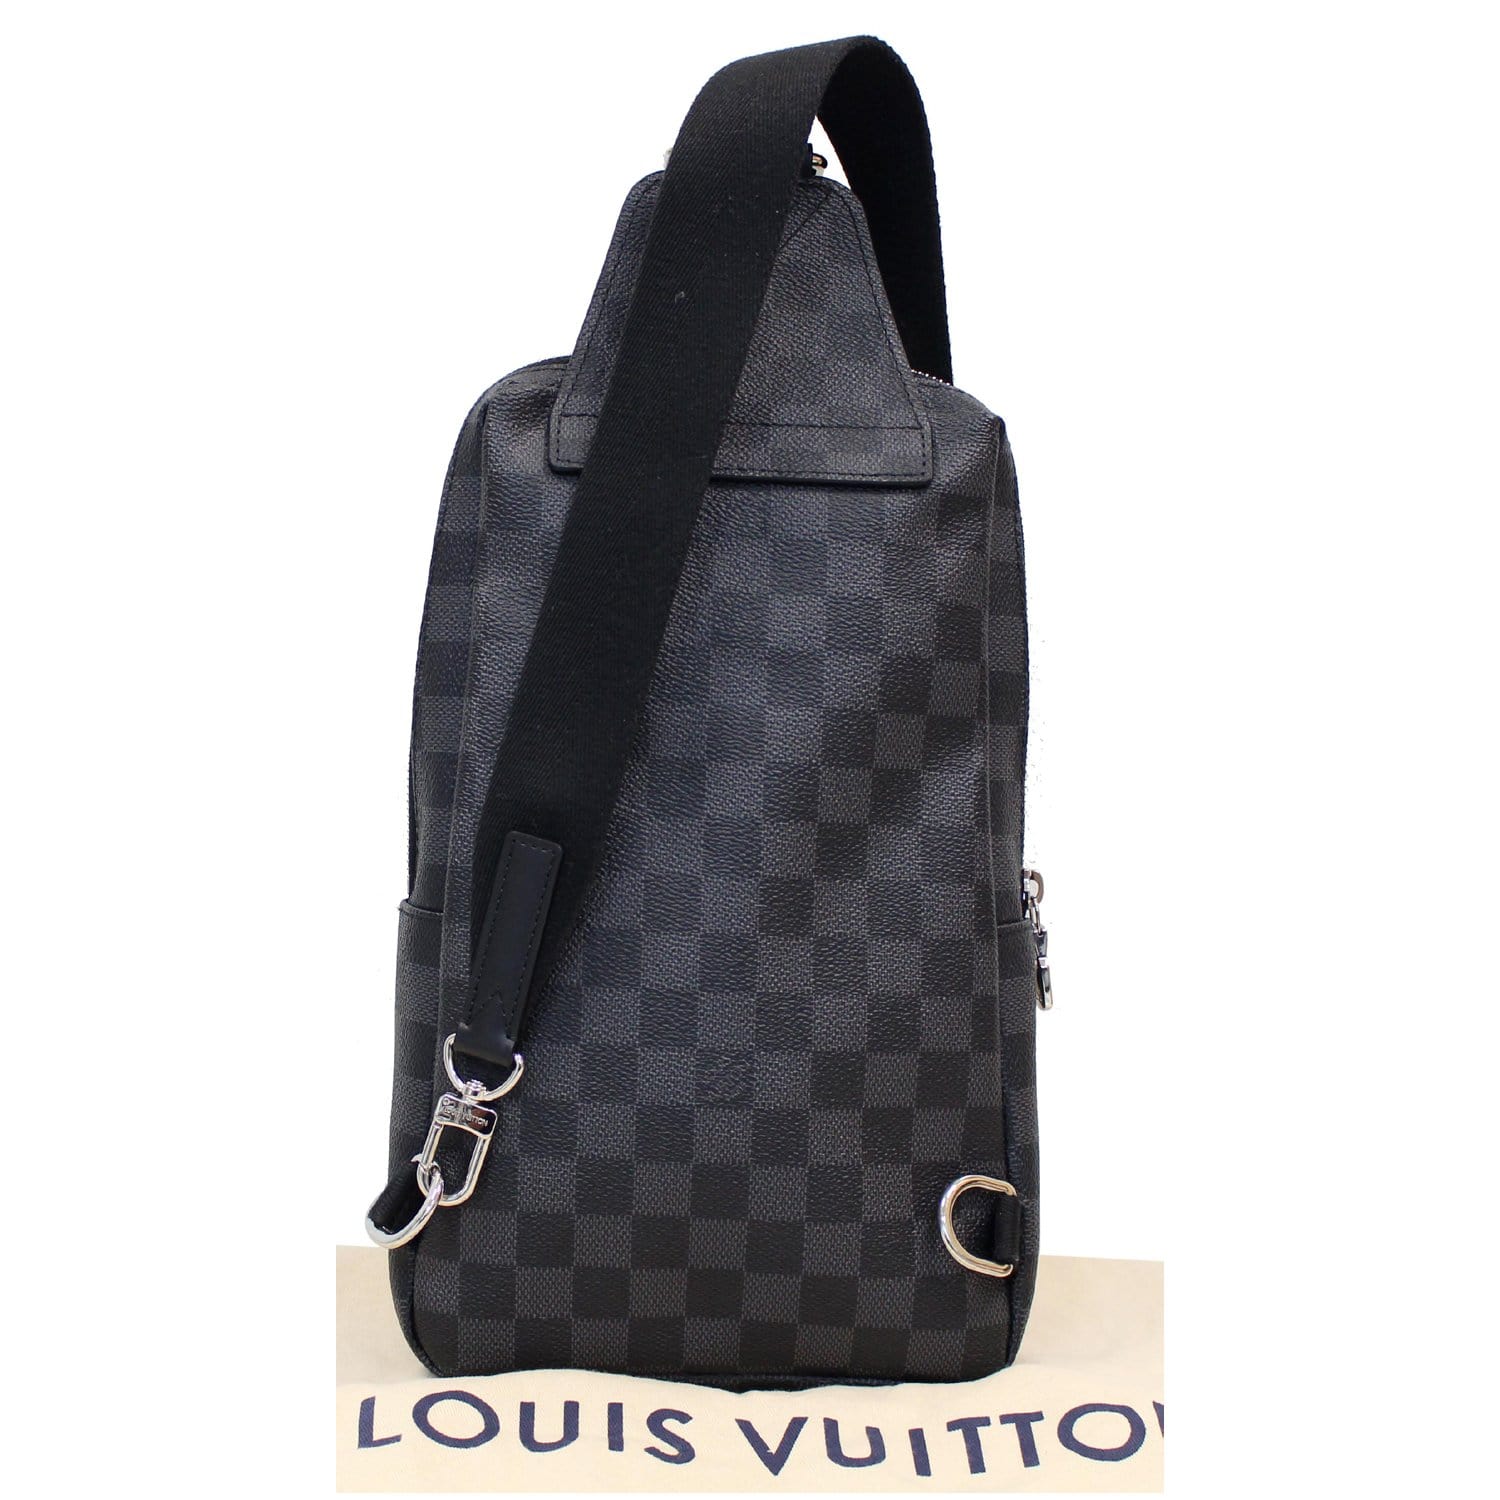 Lv Sling  Lv sling, Vuitton, Louis vuitton bag